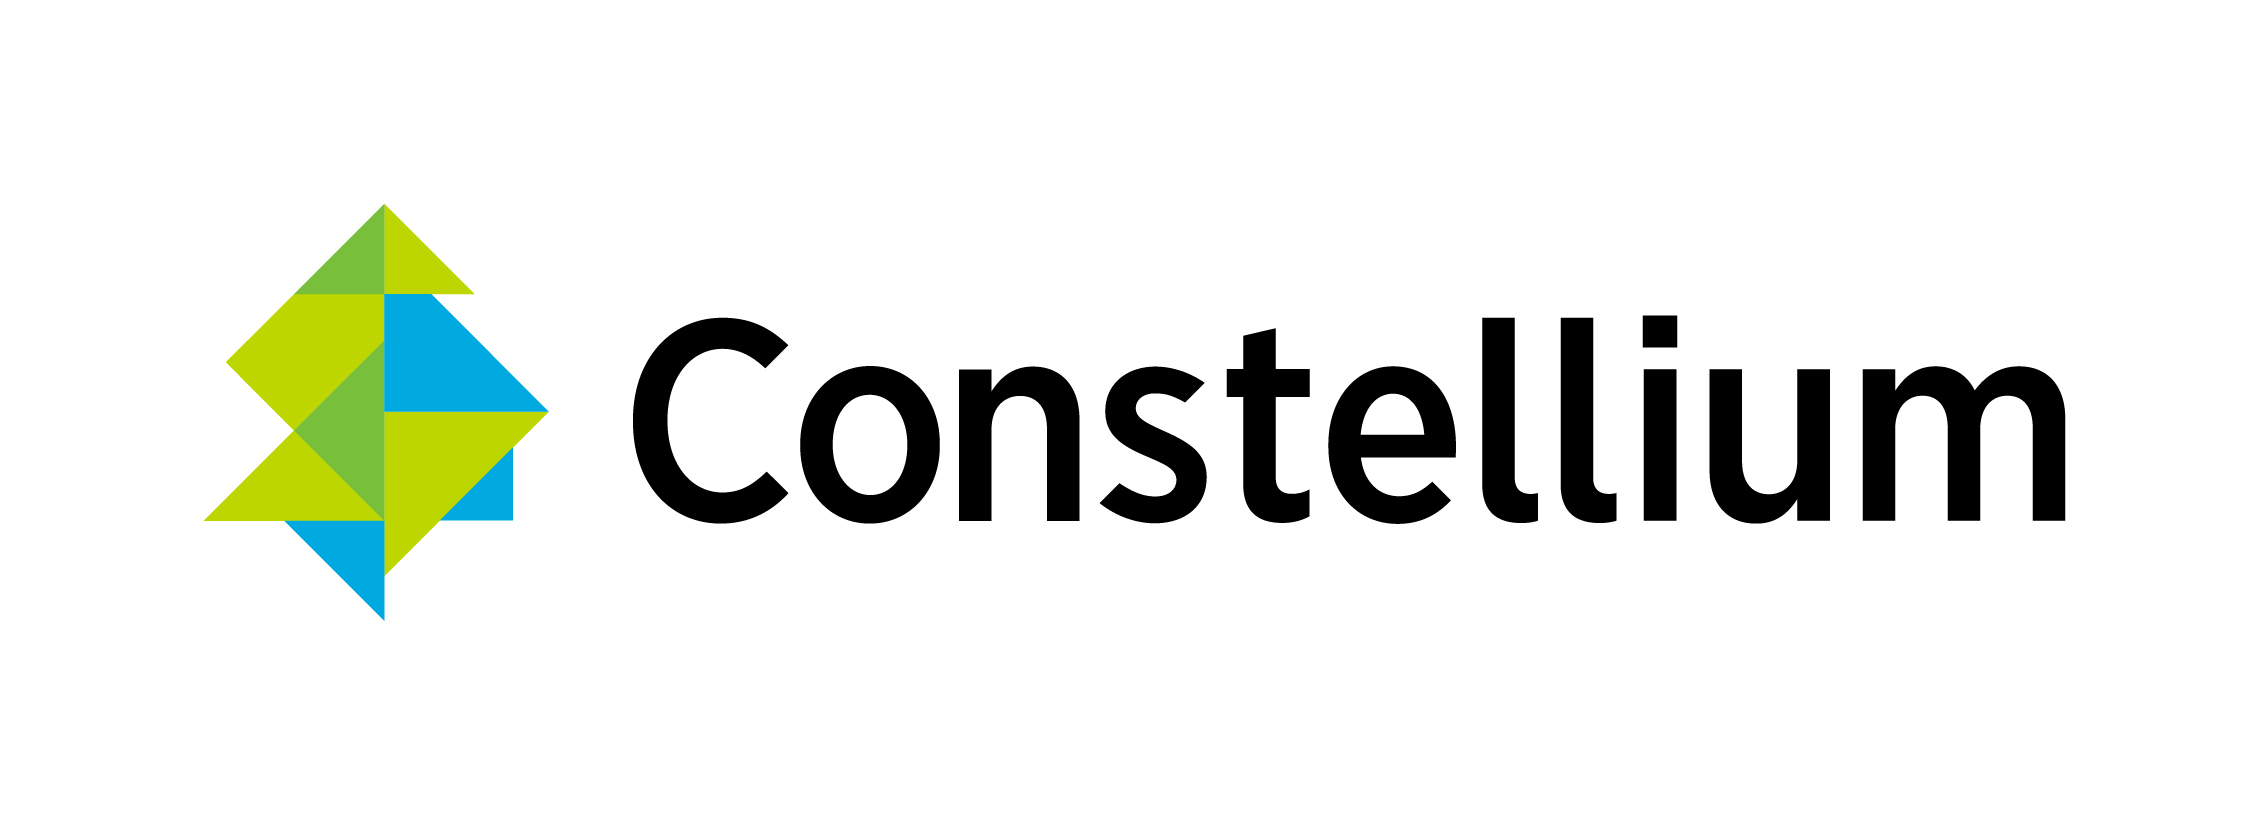 Constellium Launches Proposed Senior Notes Offering - GlobeNewswire